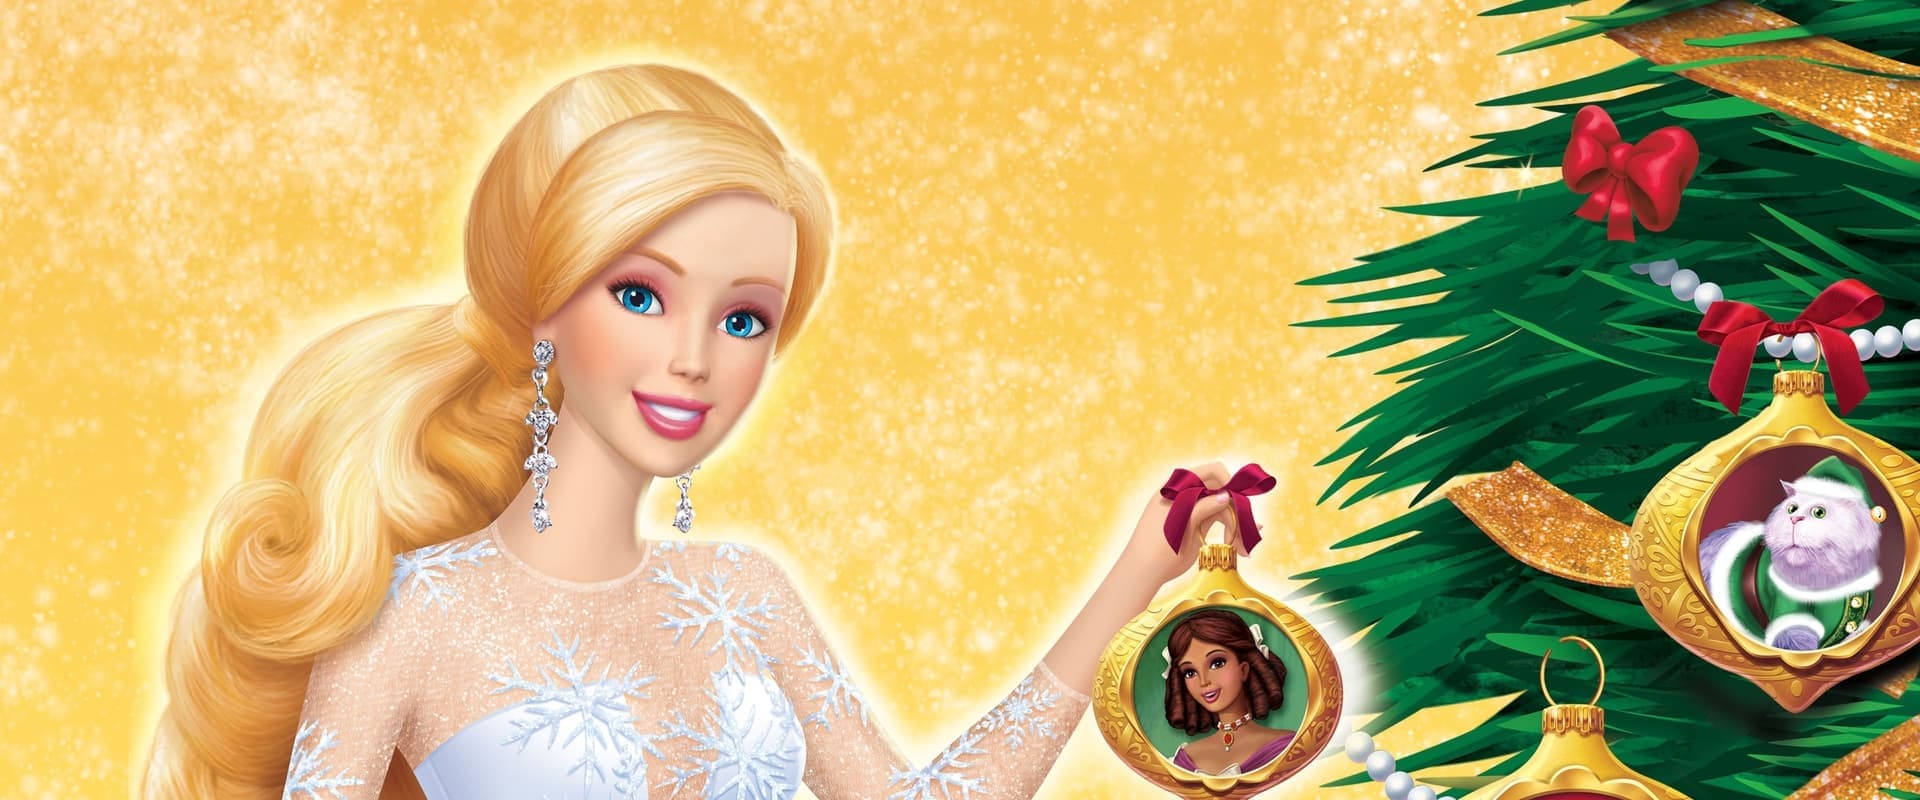 Barbie in A Christmas Carol